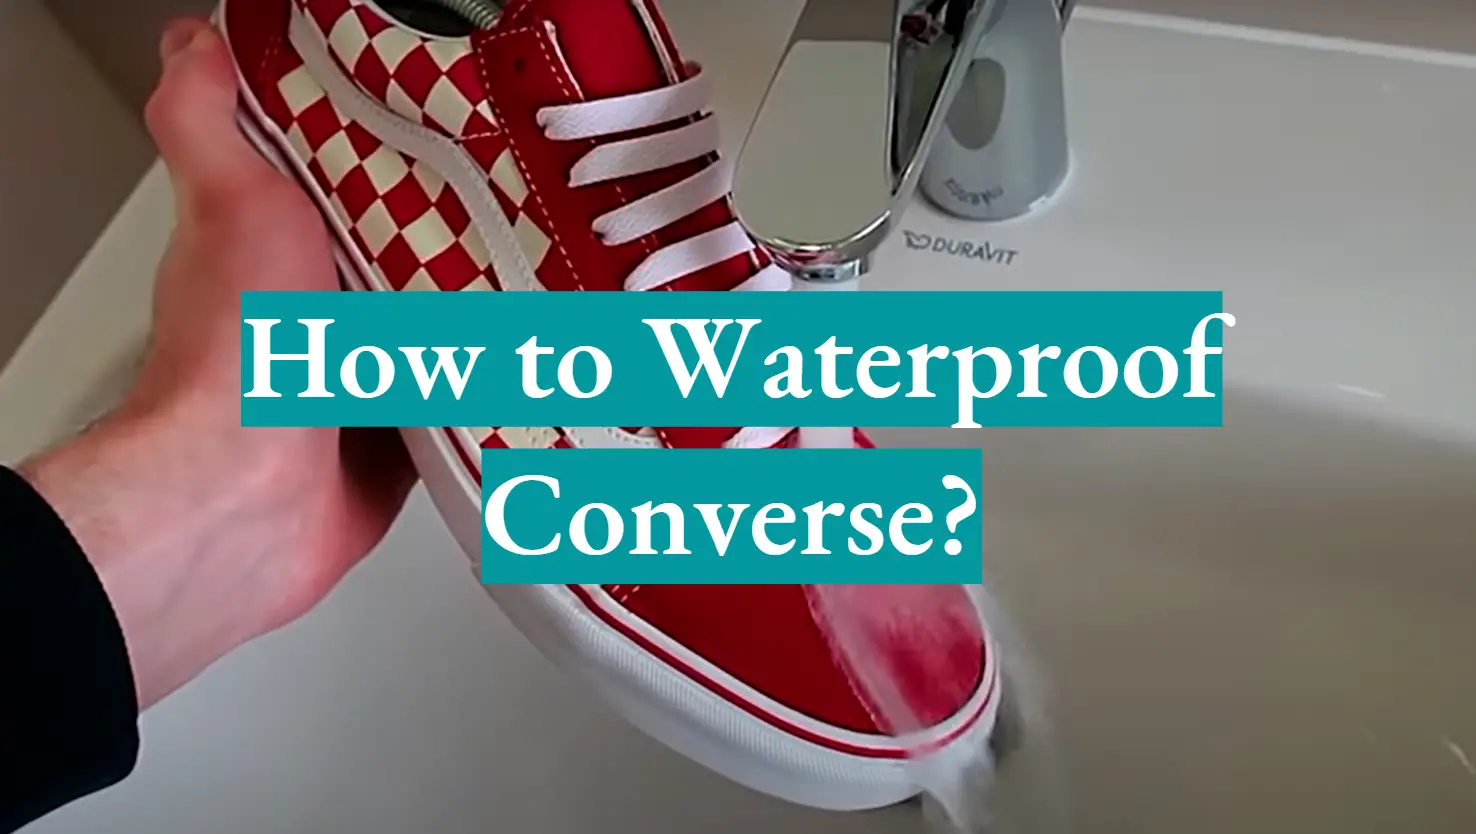 How to Waterproof Converse?